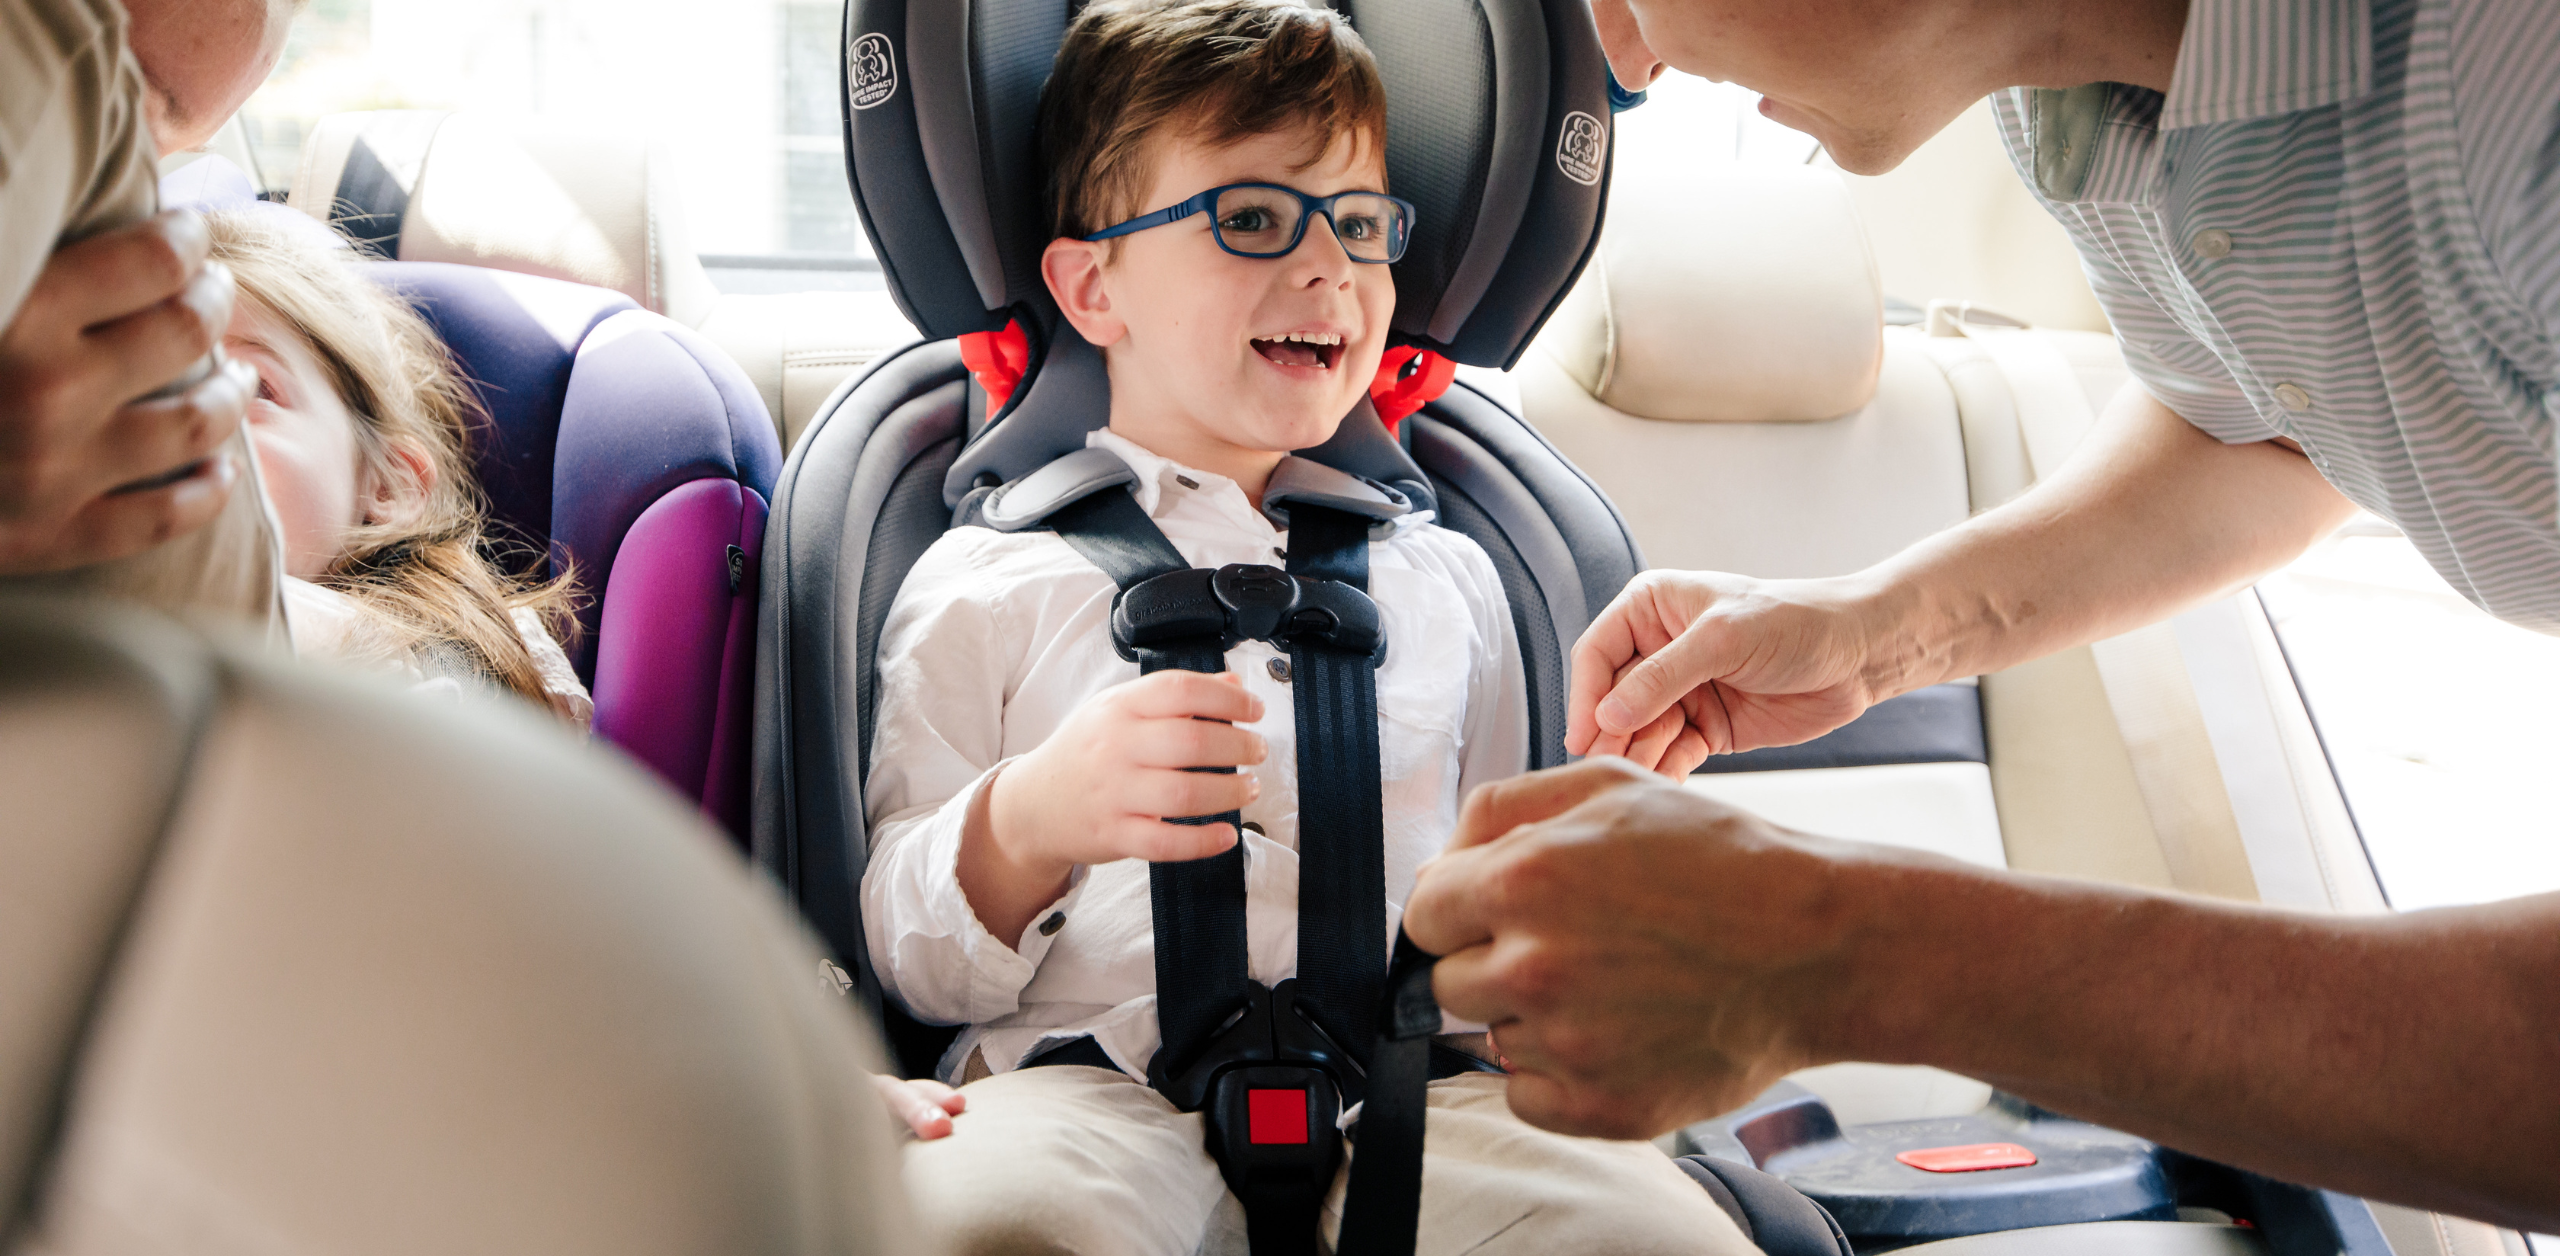 Kids Friendly Car Booster Seat, Comfortable & Convenient